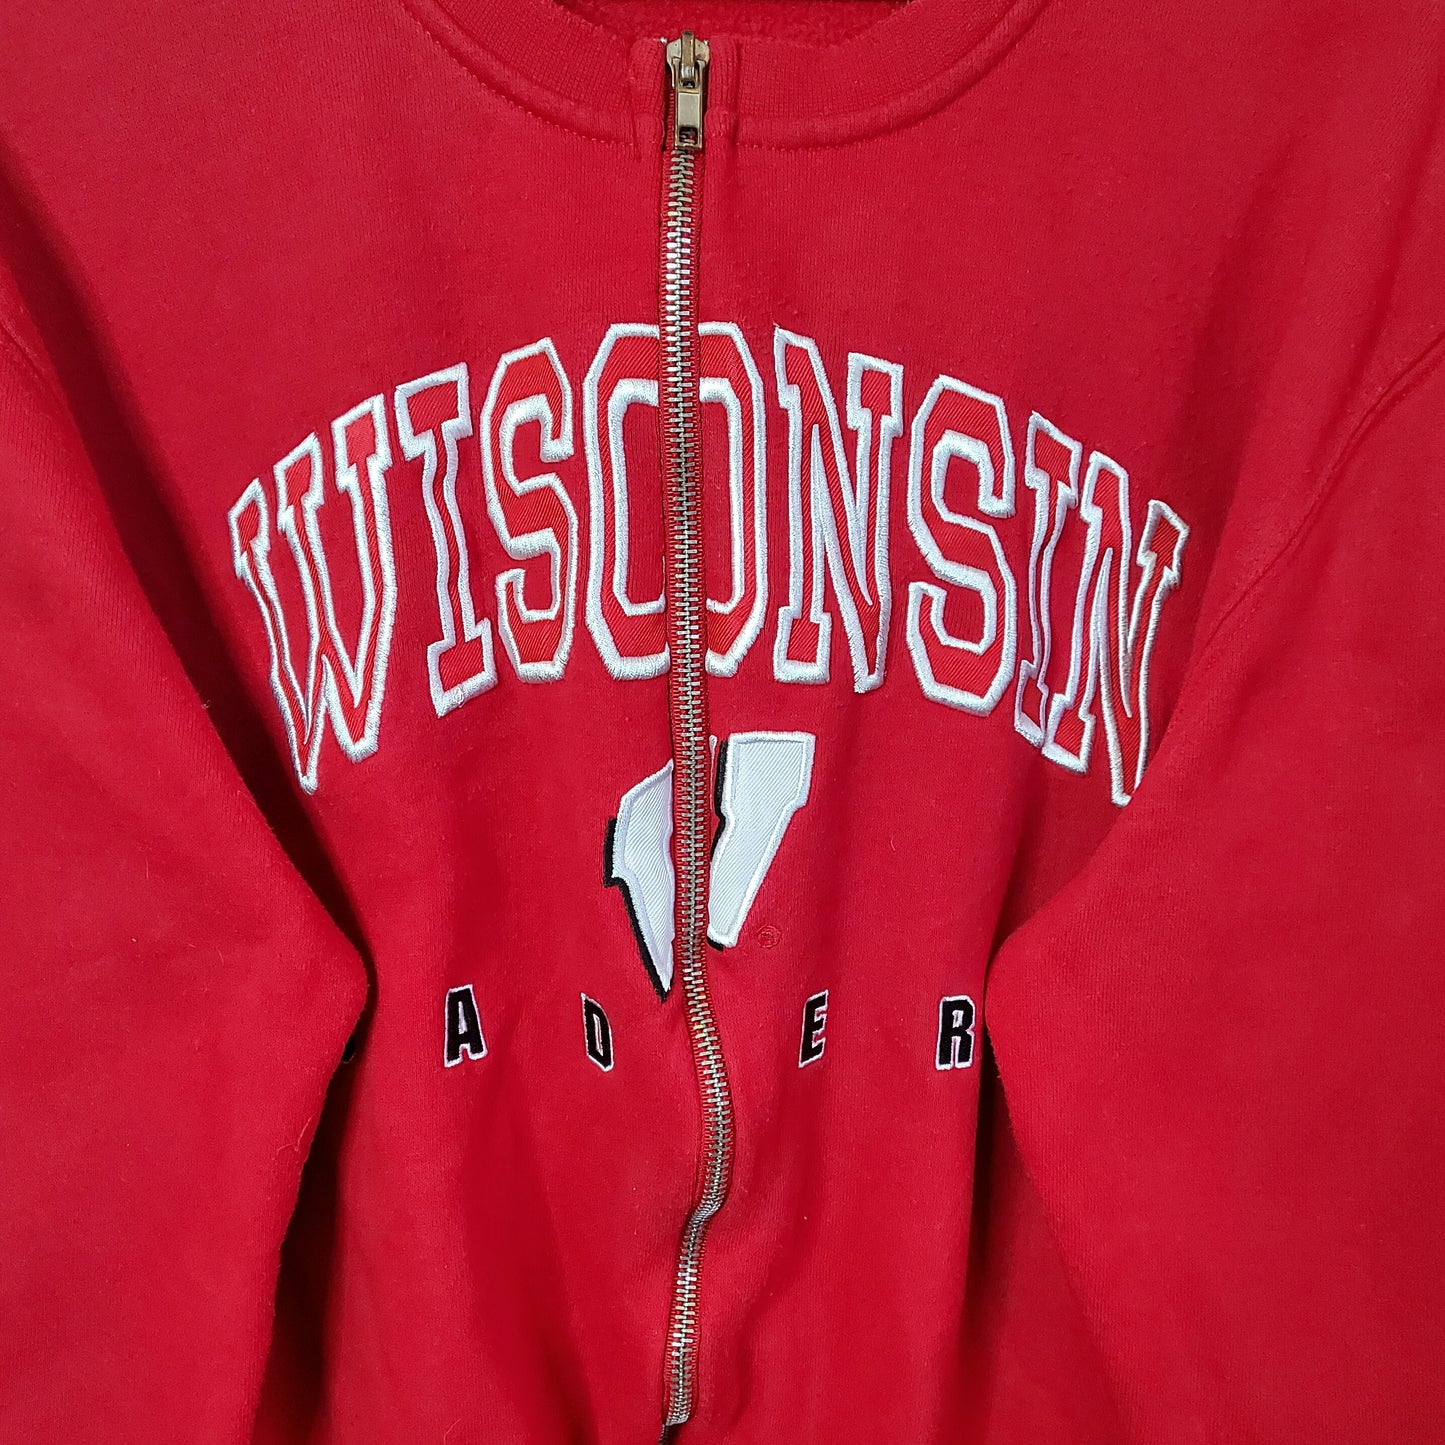 Vintage Reworked 90's Wisconsin Sweatshirt | Size S